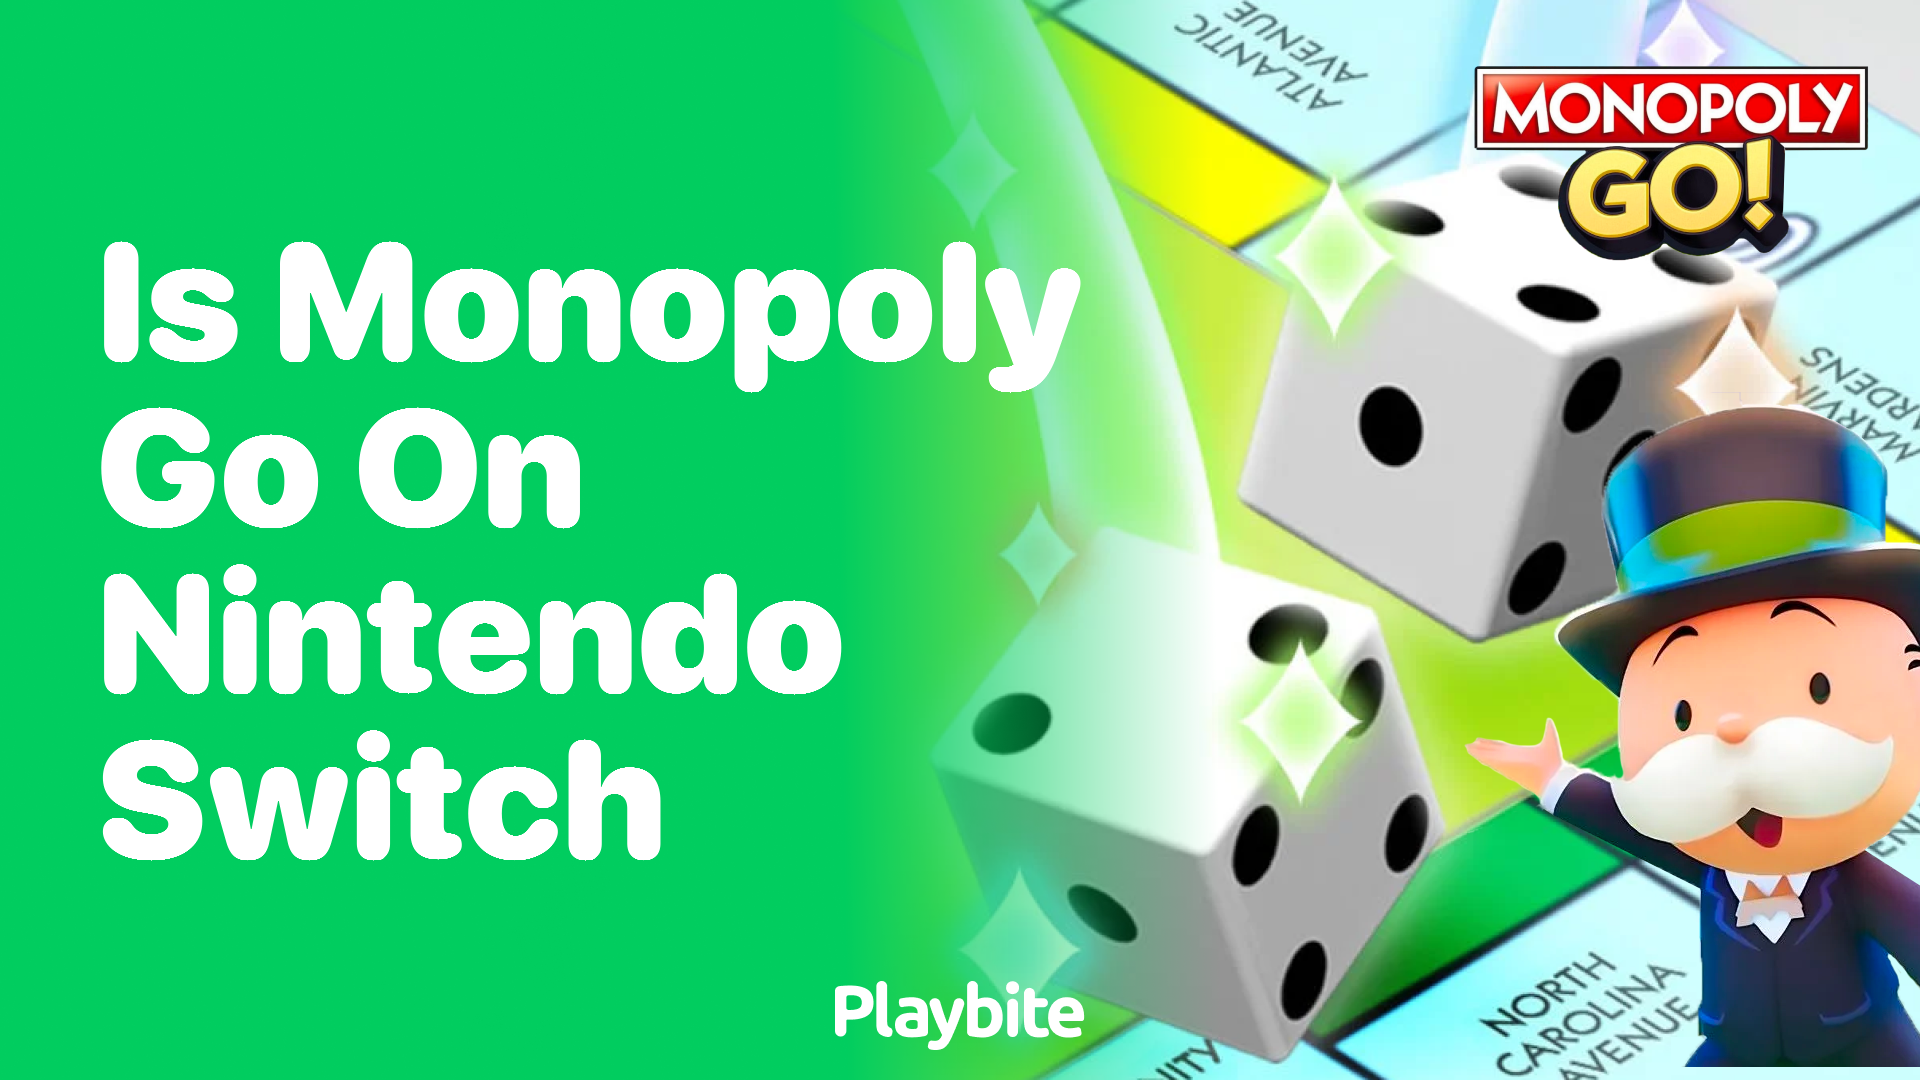 Is Monopoly Go on Nintendo Switch?